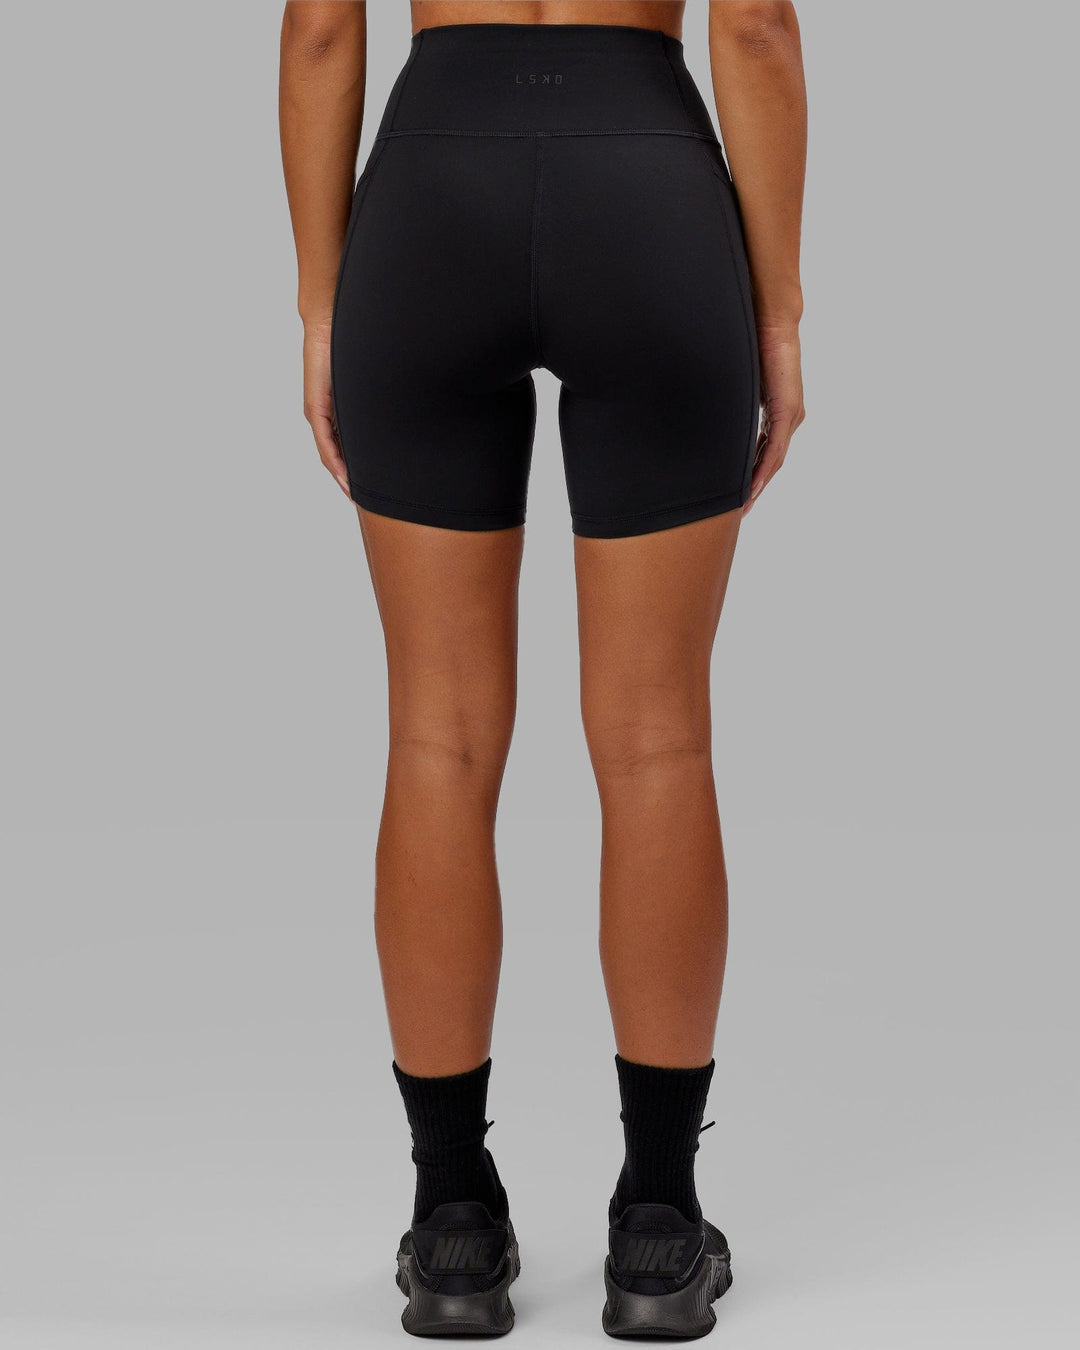 Rep Mid-Length Shorts - Black-Hyper Teal